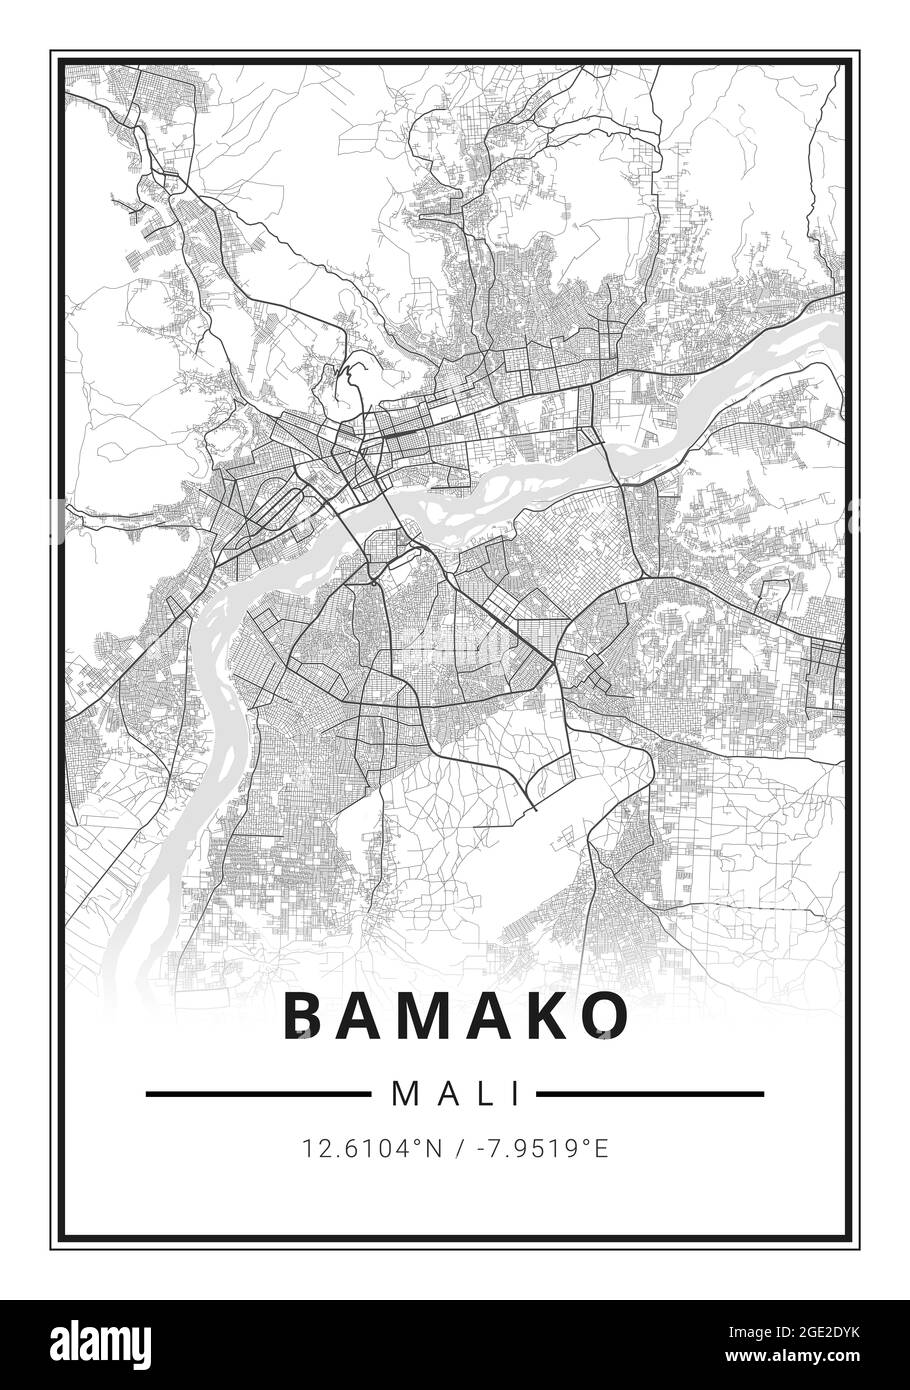 Street map art of Bamako city in Mali - Africa Stock Photo